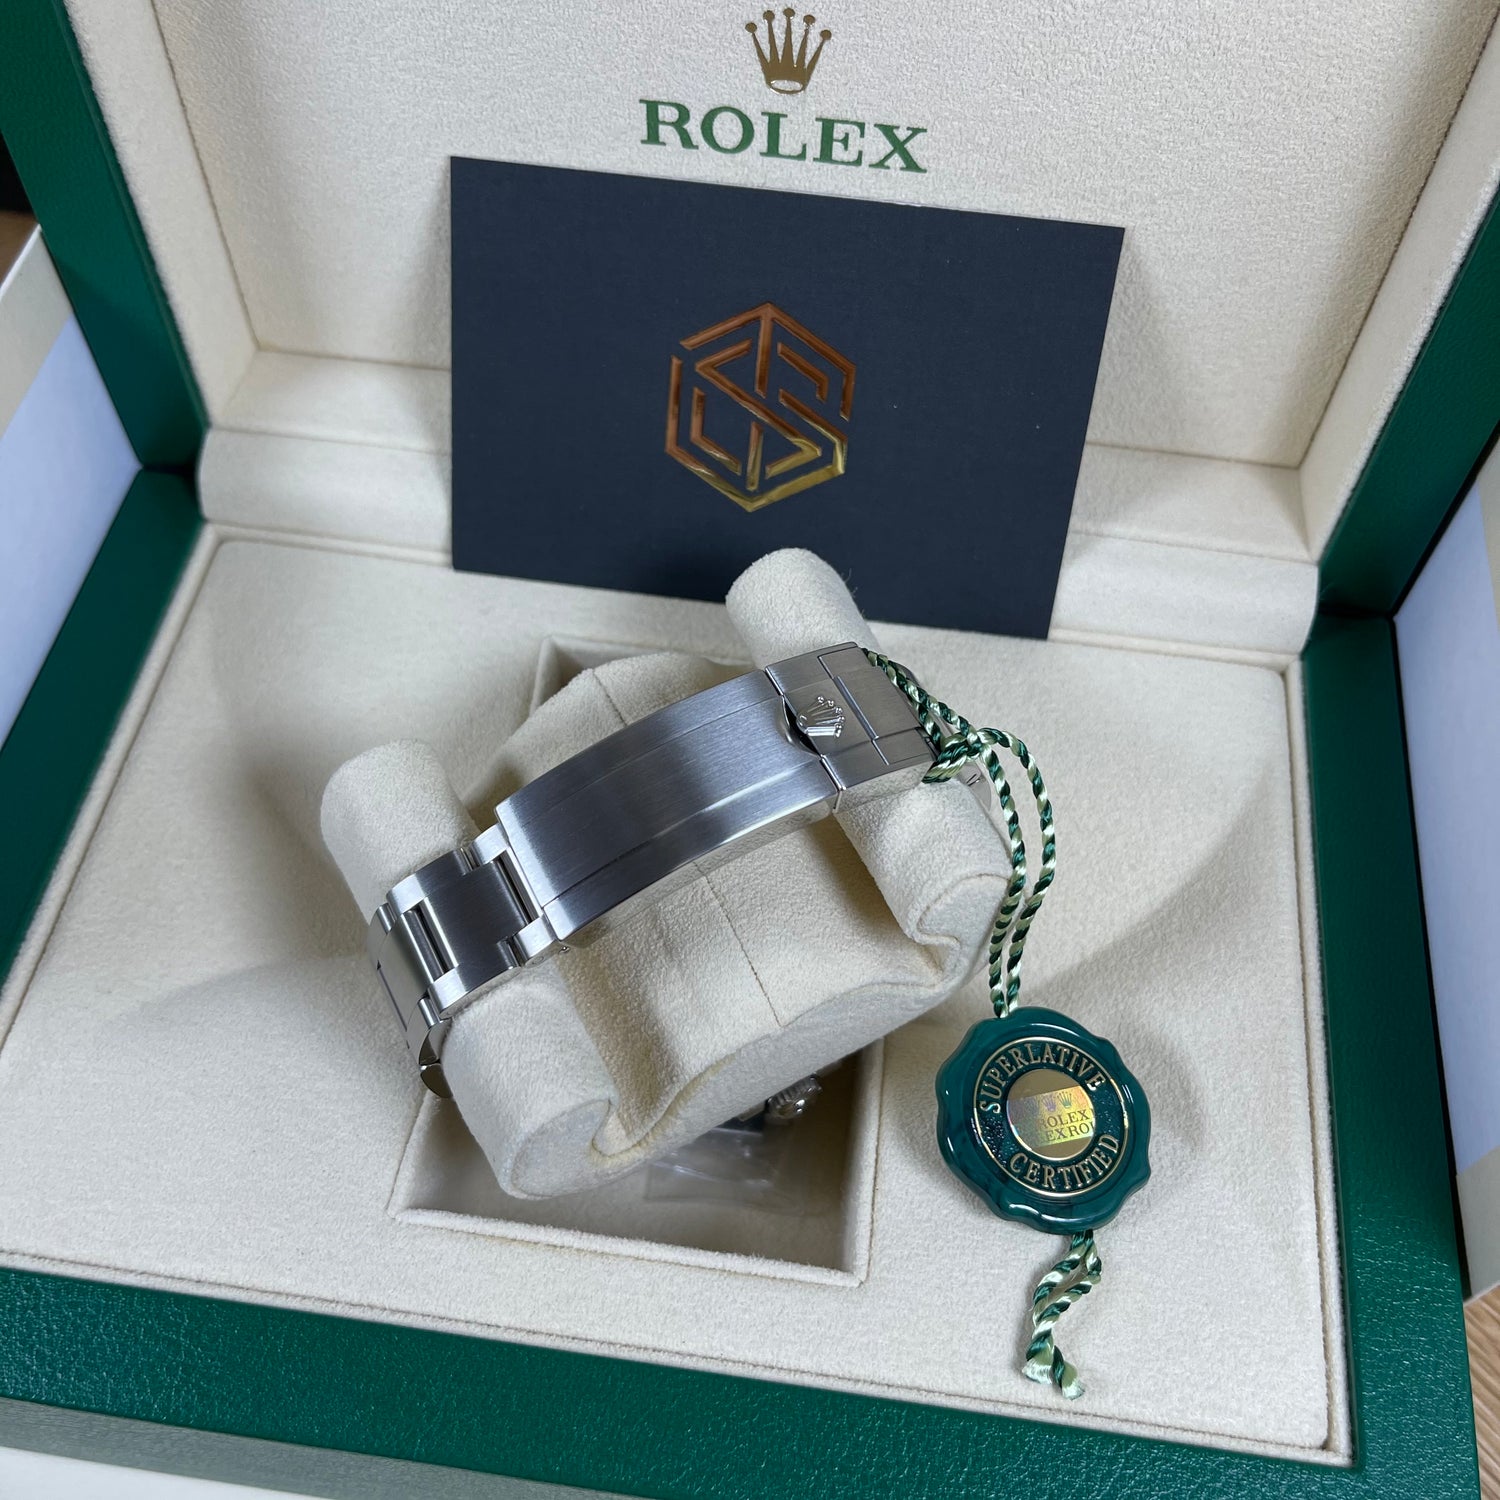 Rolex Submariner Date Hulk 116610LV Mint Condition 2019 Full Set Watch